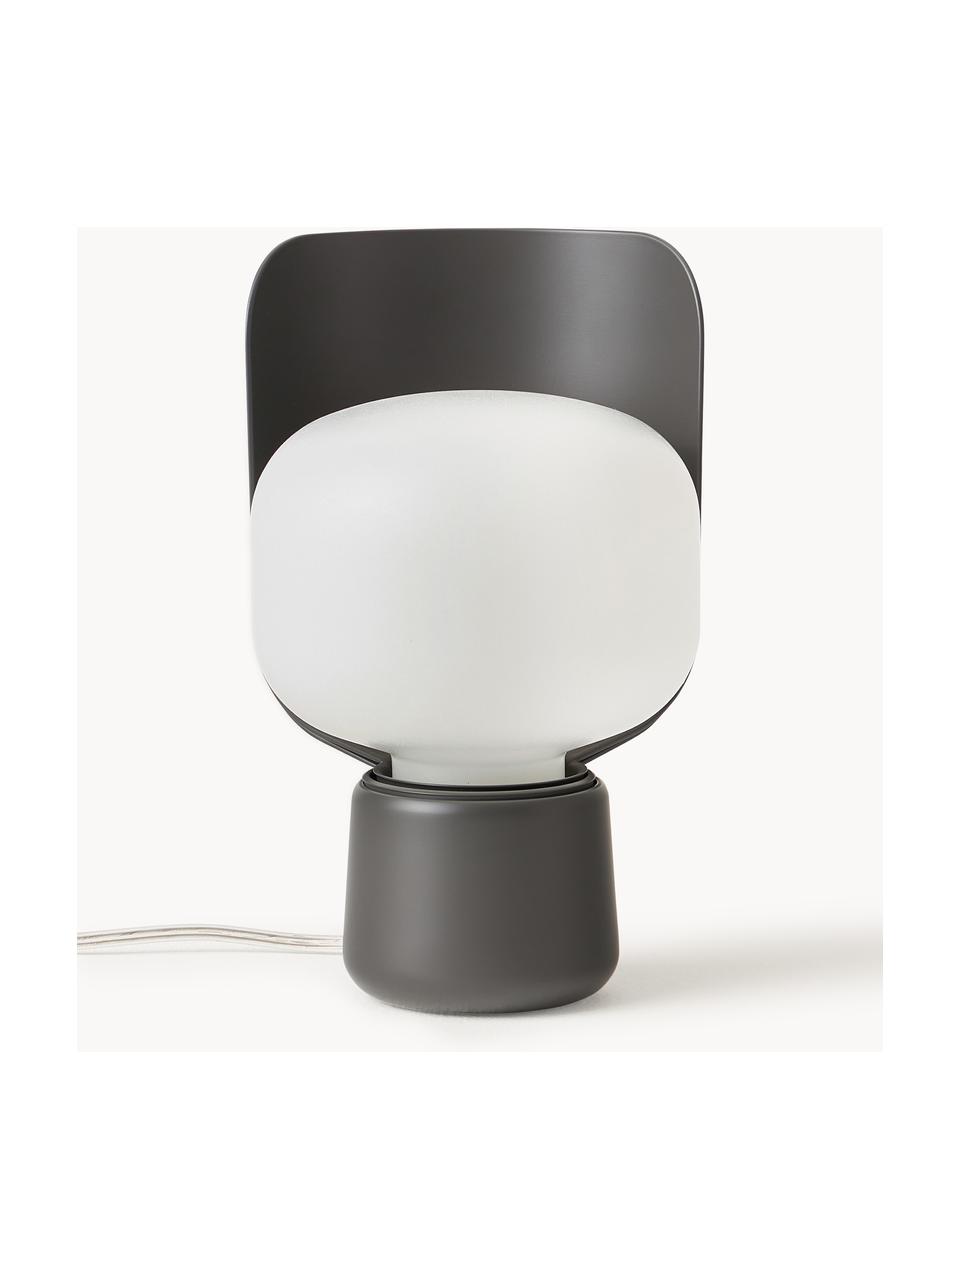 Petite lampe à poser artisanale Blom, Blanc, anthracite, Ø 15 x haut. 24 cm